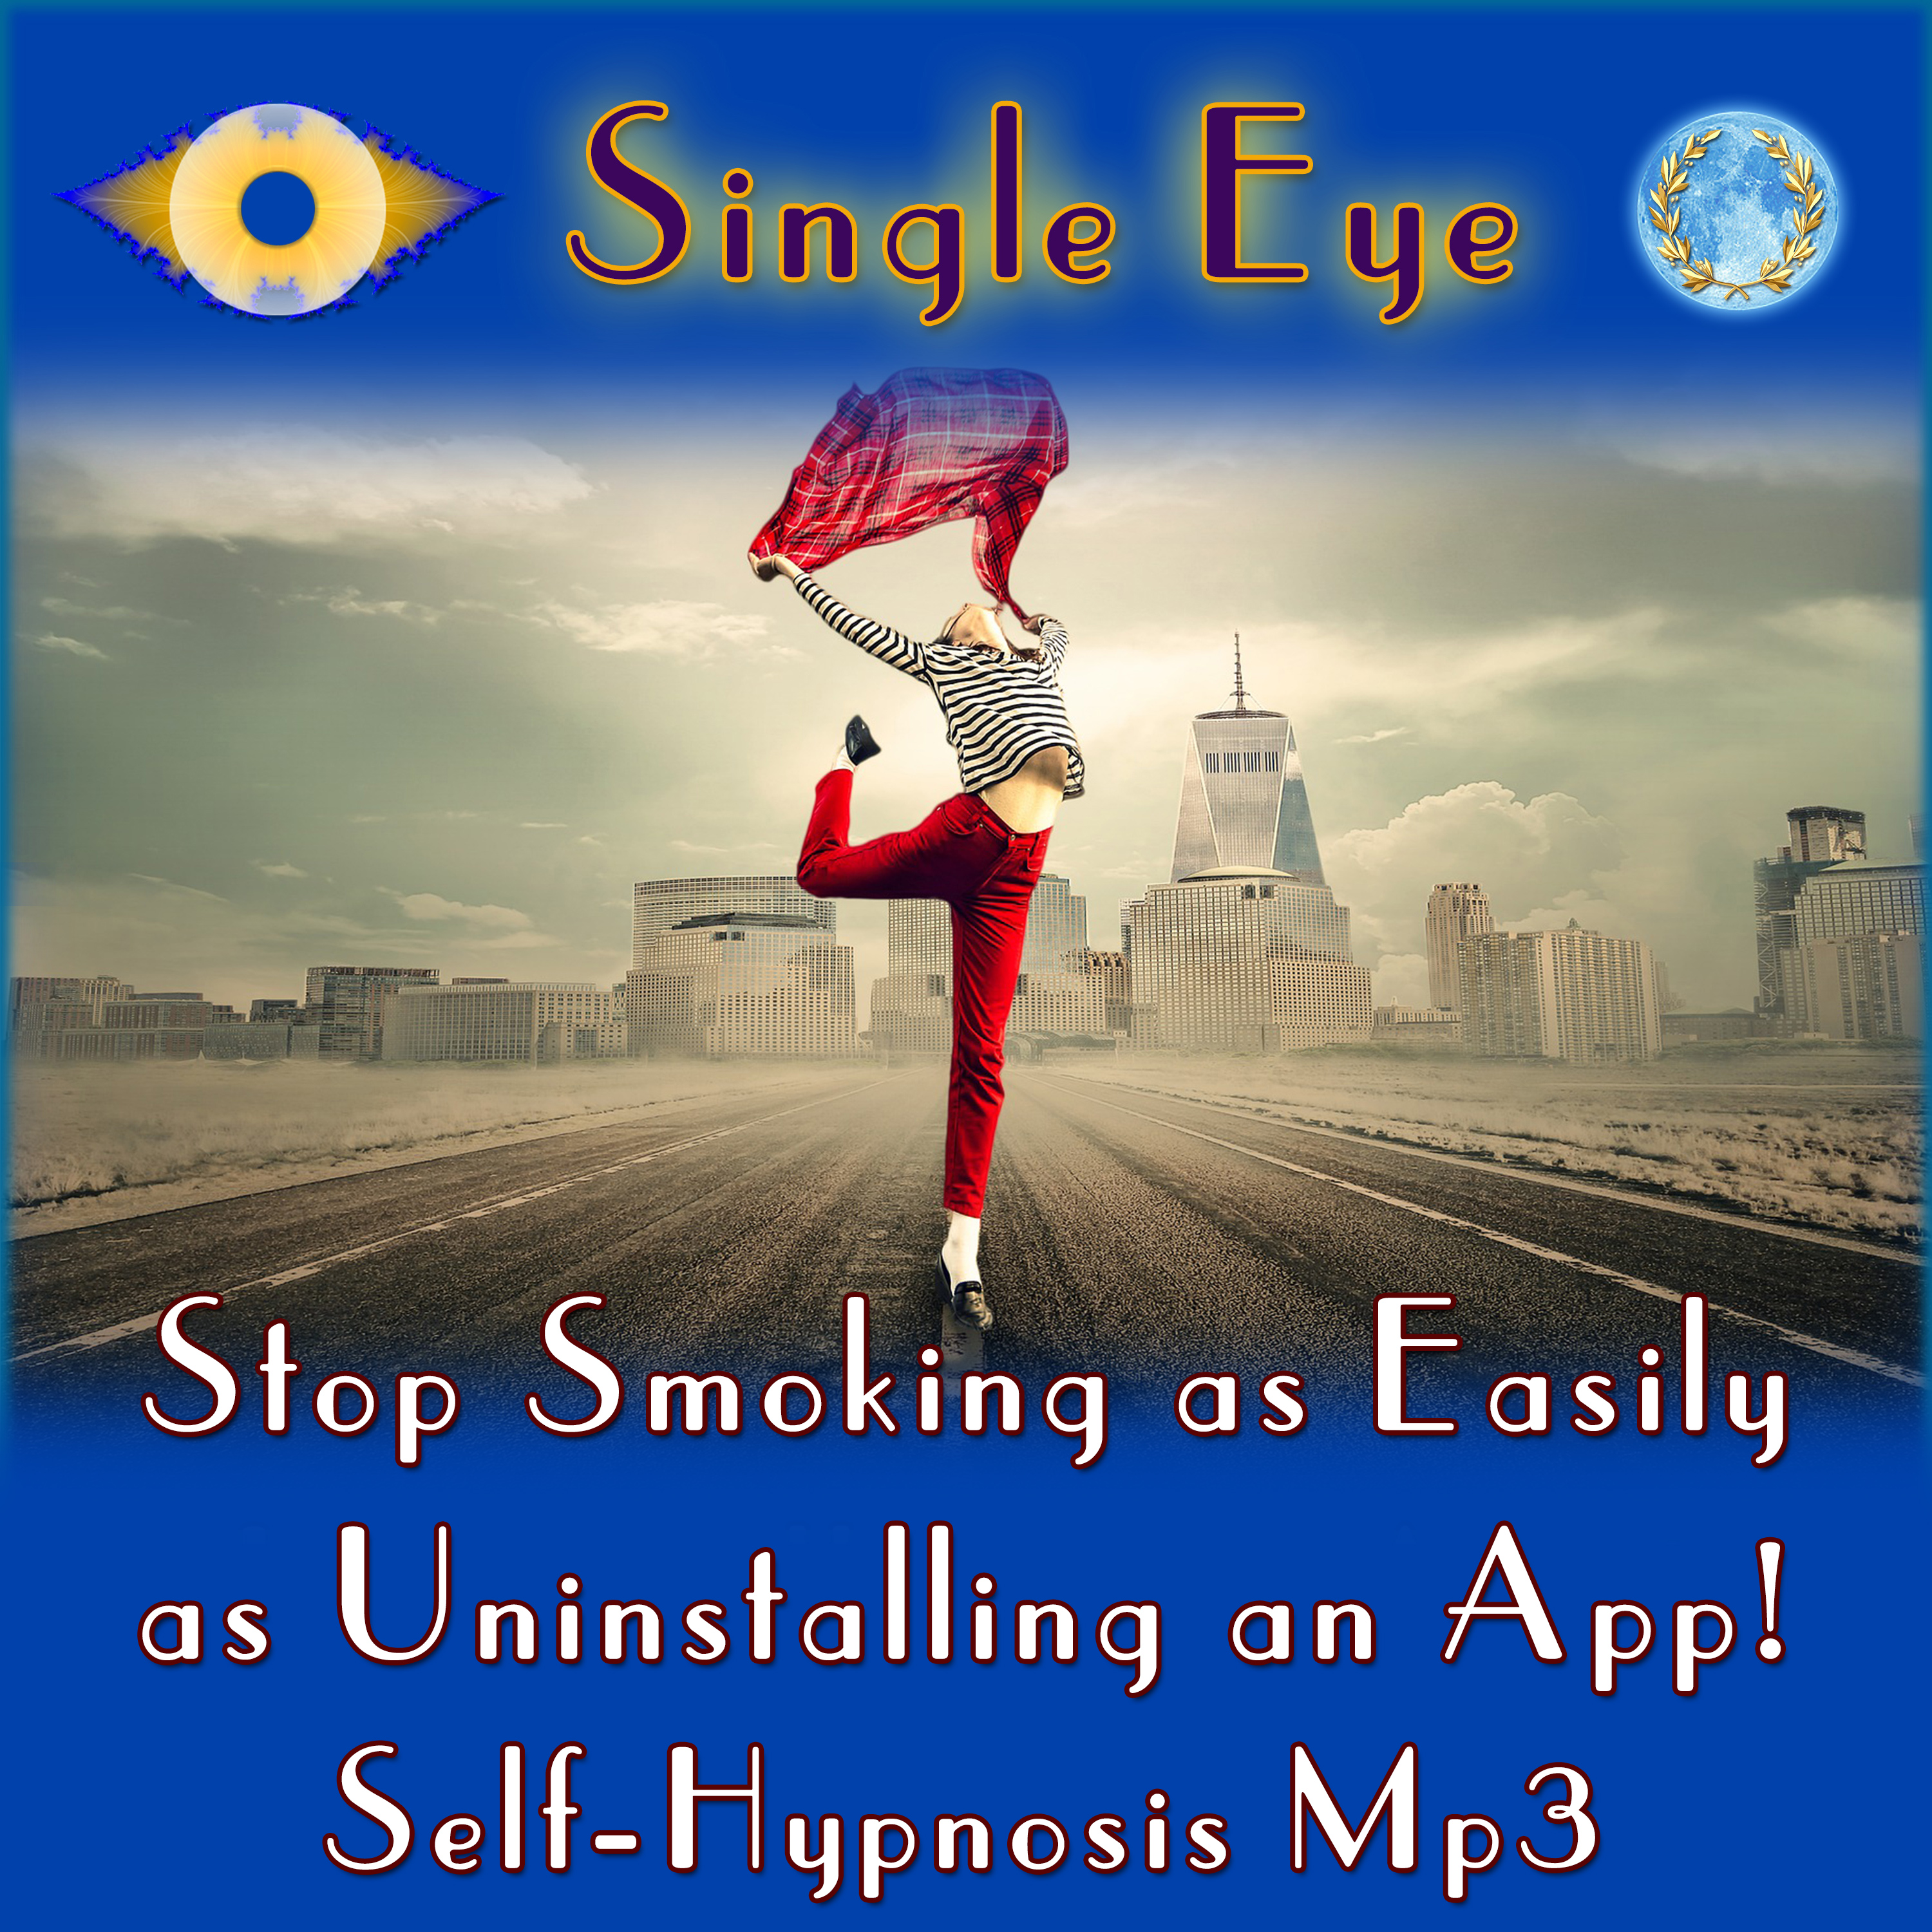 Stop Smoking Self-Hypnosis Mp3  As easy as uninstalling an app!